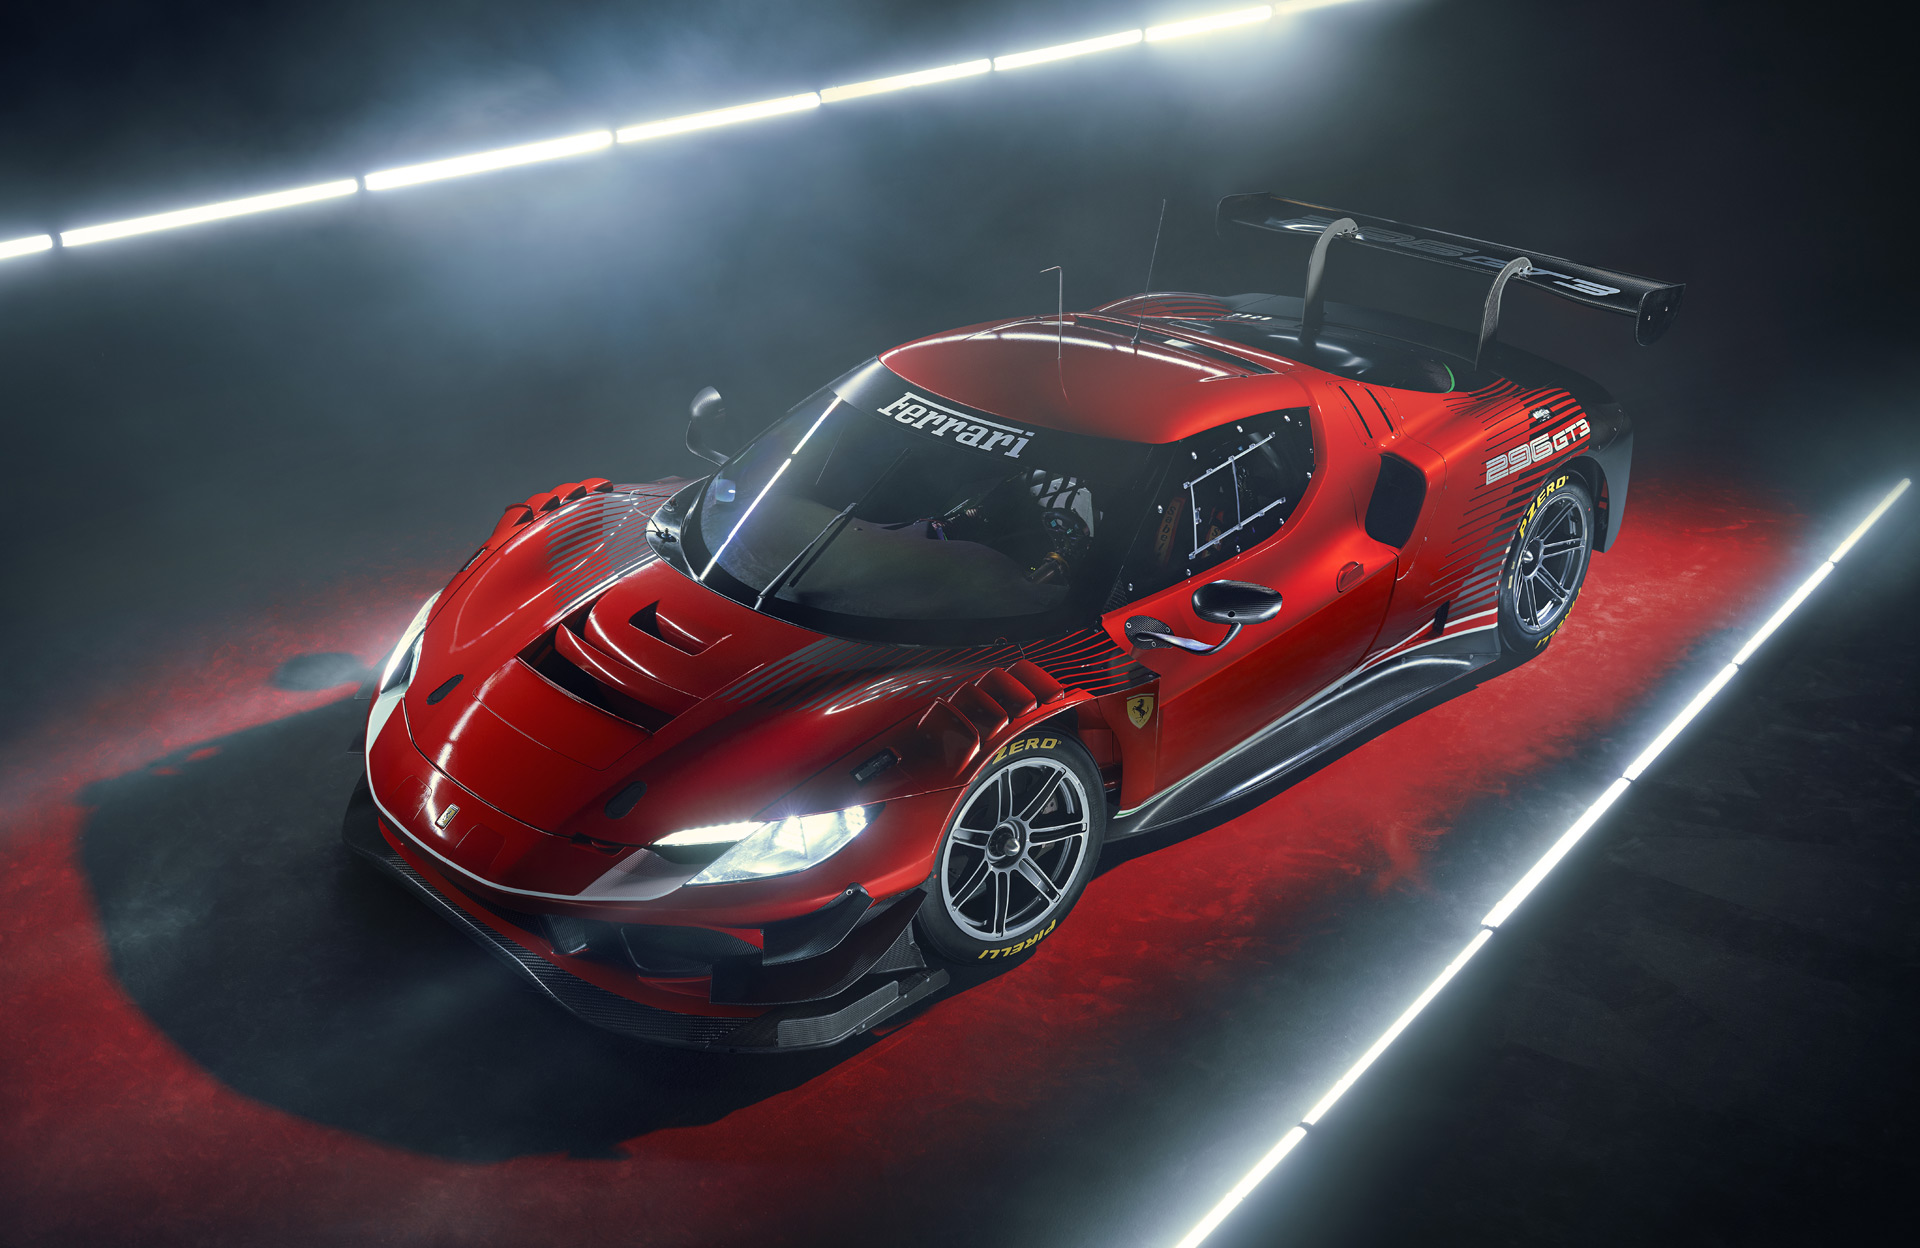 V-6-powered Ferrari 296 GT3 race automobile revealed